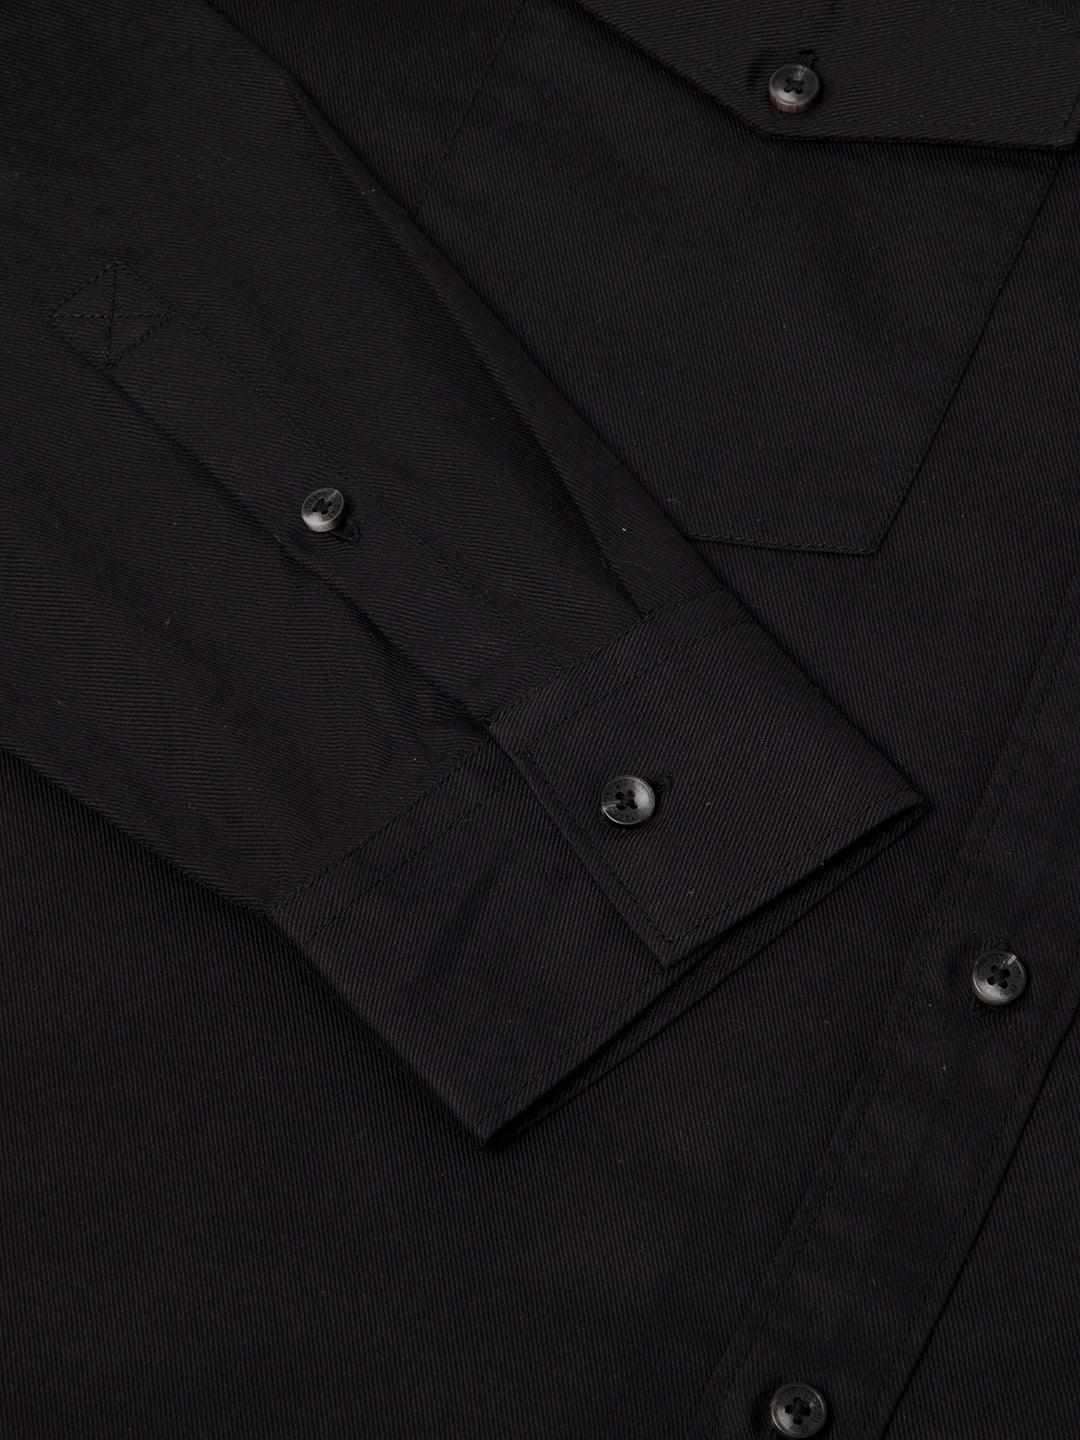 Double Pocket Cargo Shirt in Raven Black- Comfort Fit